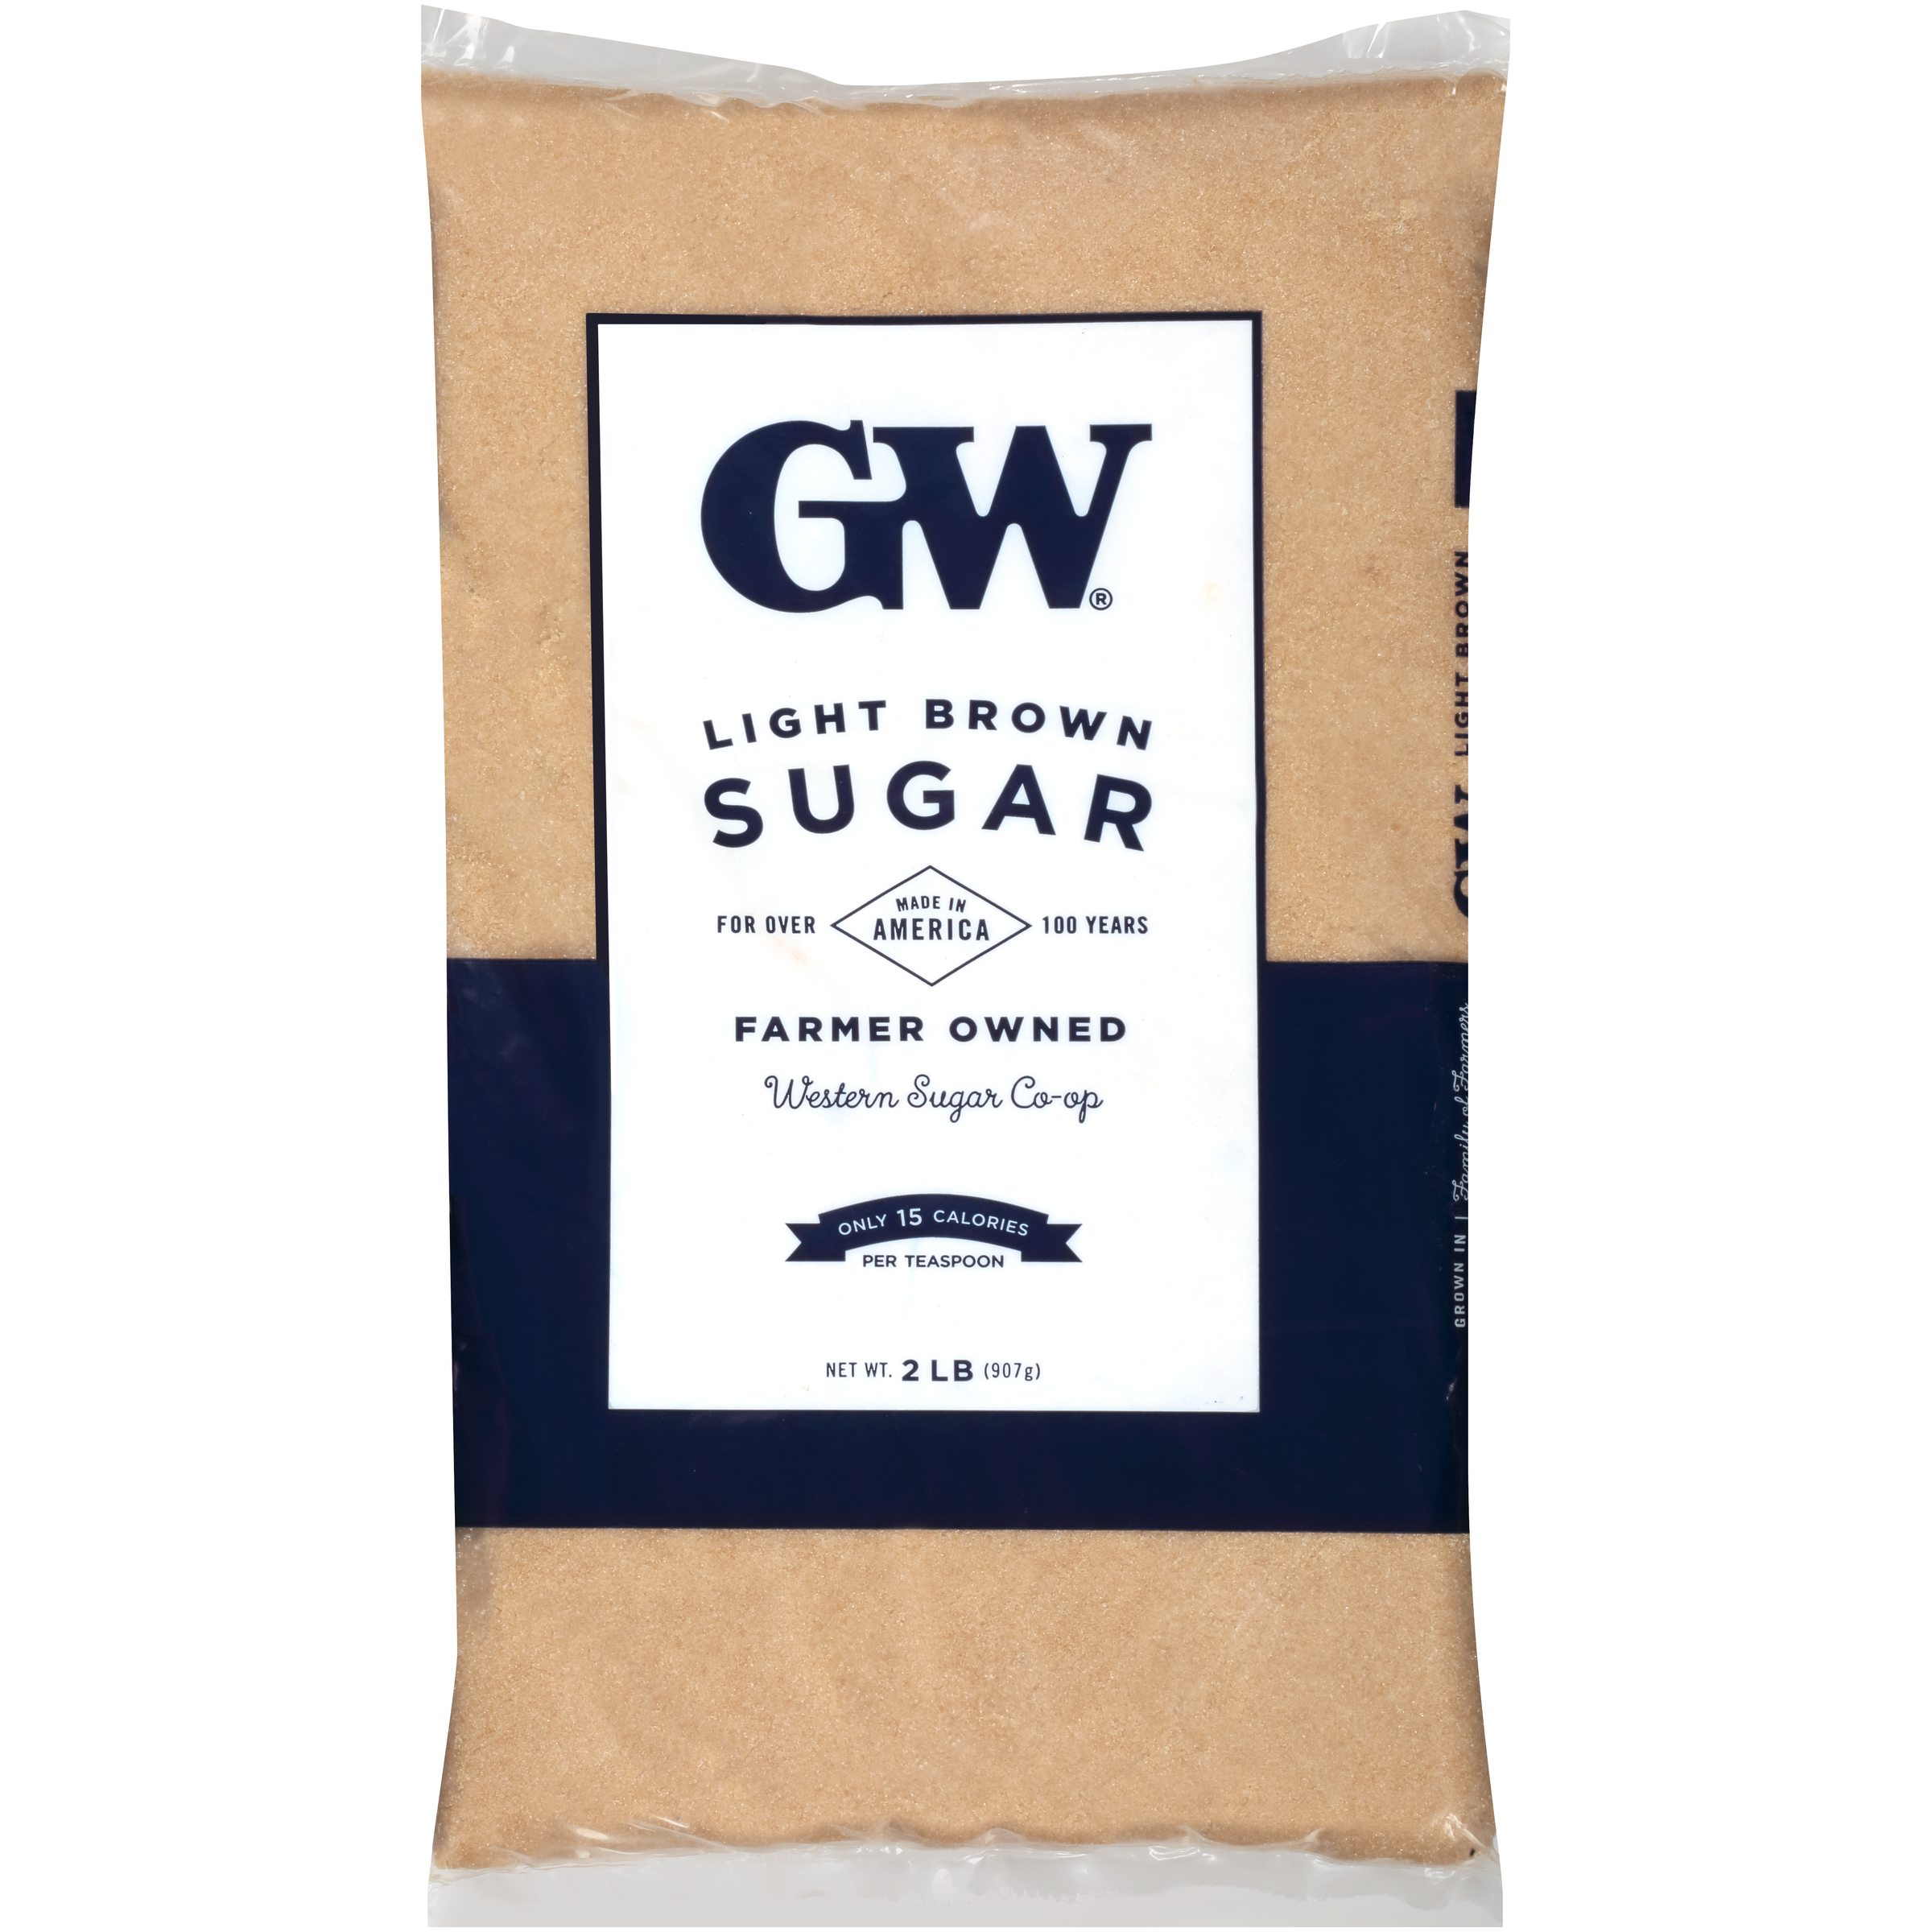 GW Light Brown Sugar